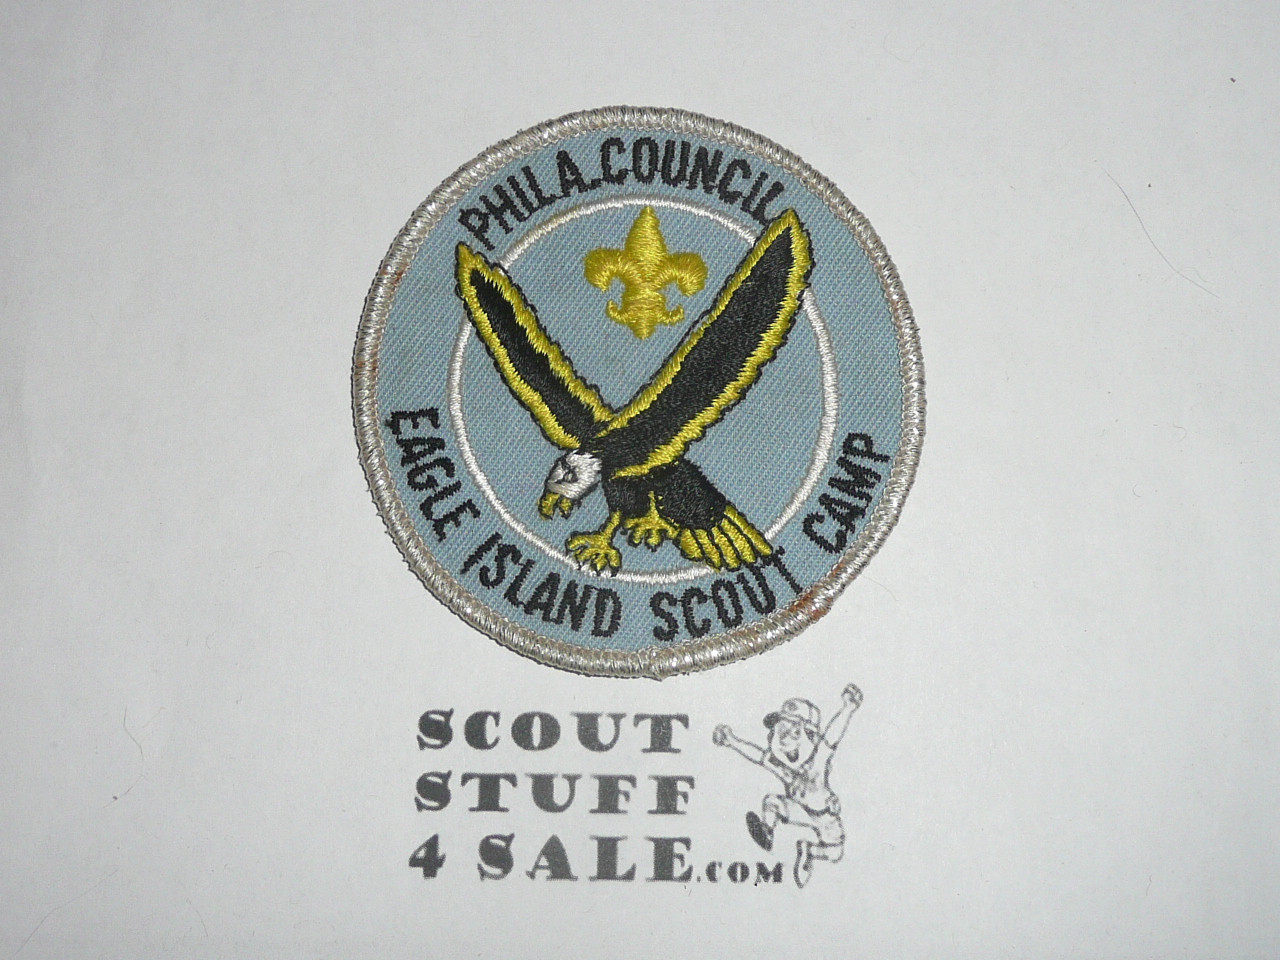 Eagle Island Scout Camp Patch, Philadelphia Council